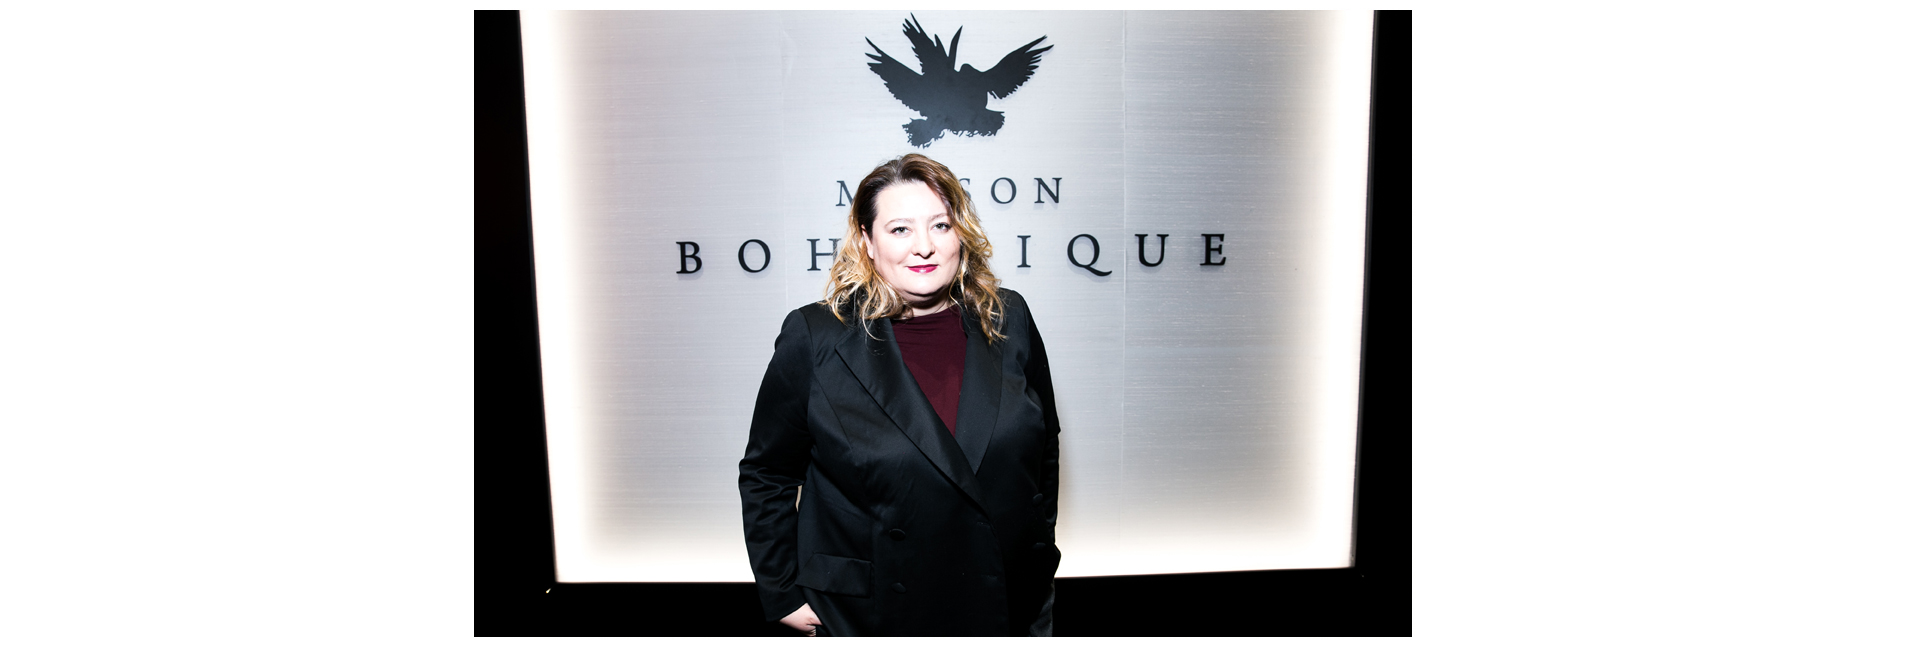 Maison Bohemique представил новую коллекцию Demi Couture (фото 8)